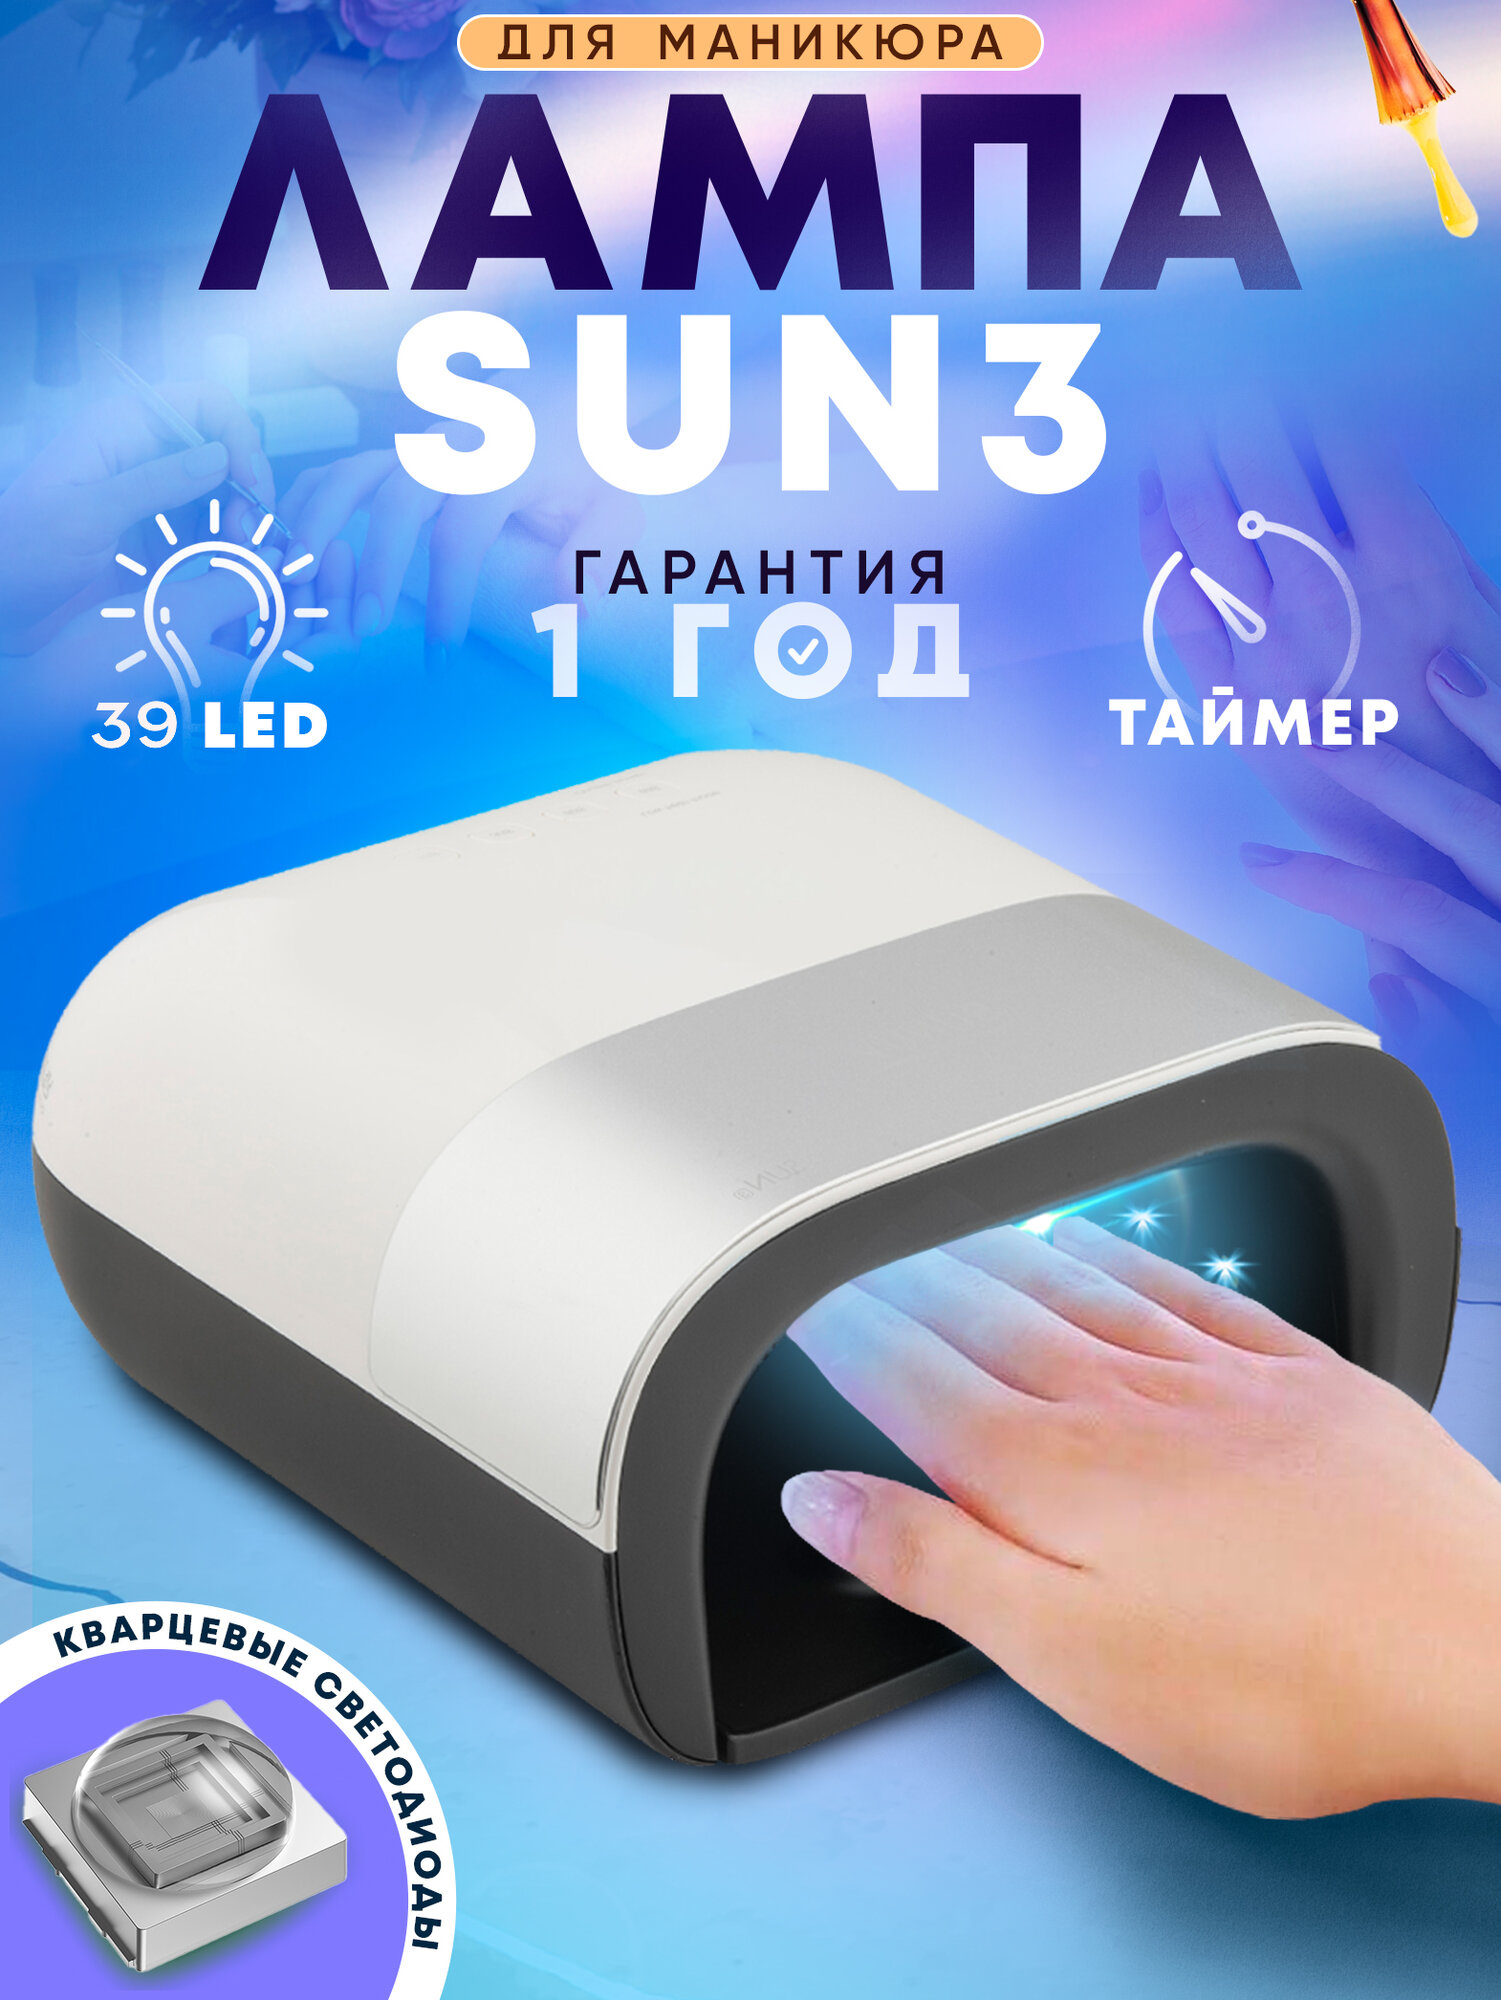 LED Лампа SUN 3 24/48 Вт. SUNUV. с Кварцевыми диодами